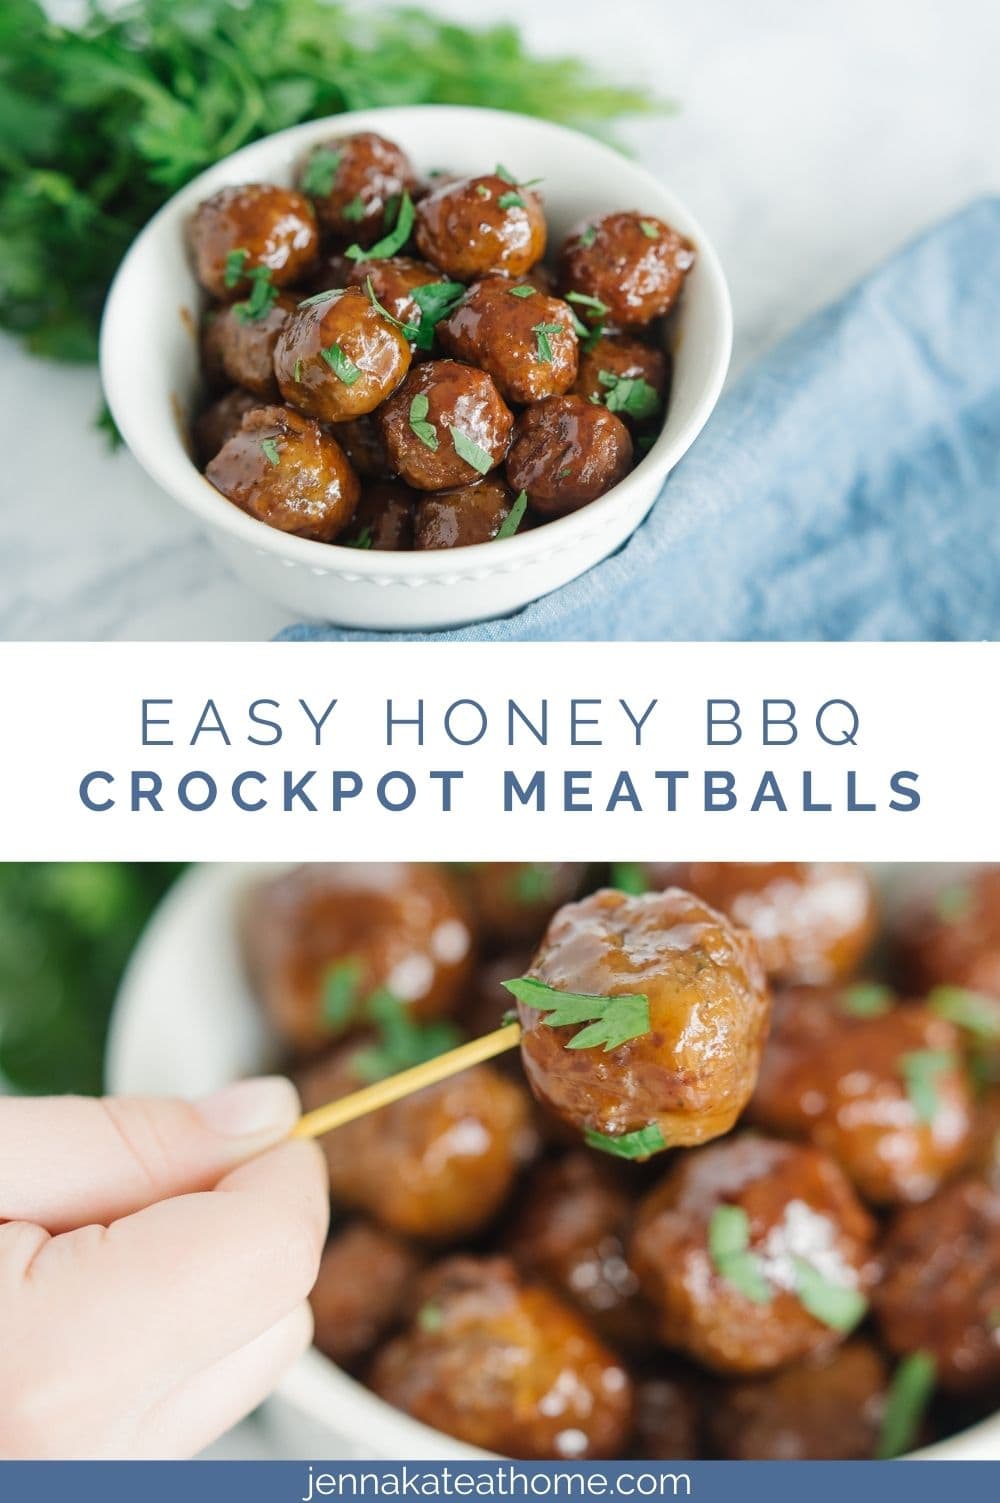 Crockpot Honey BBQ Meatballs